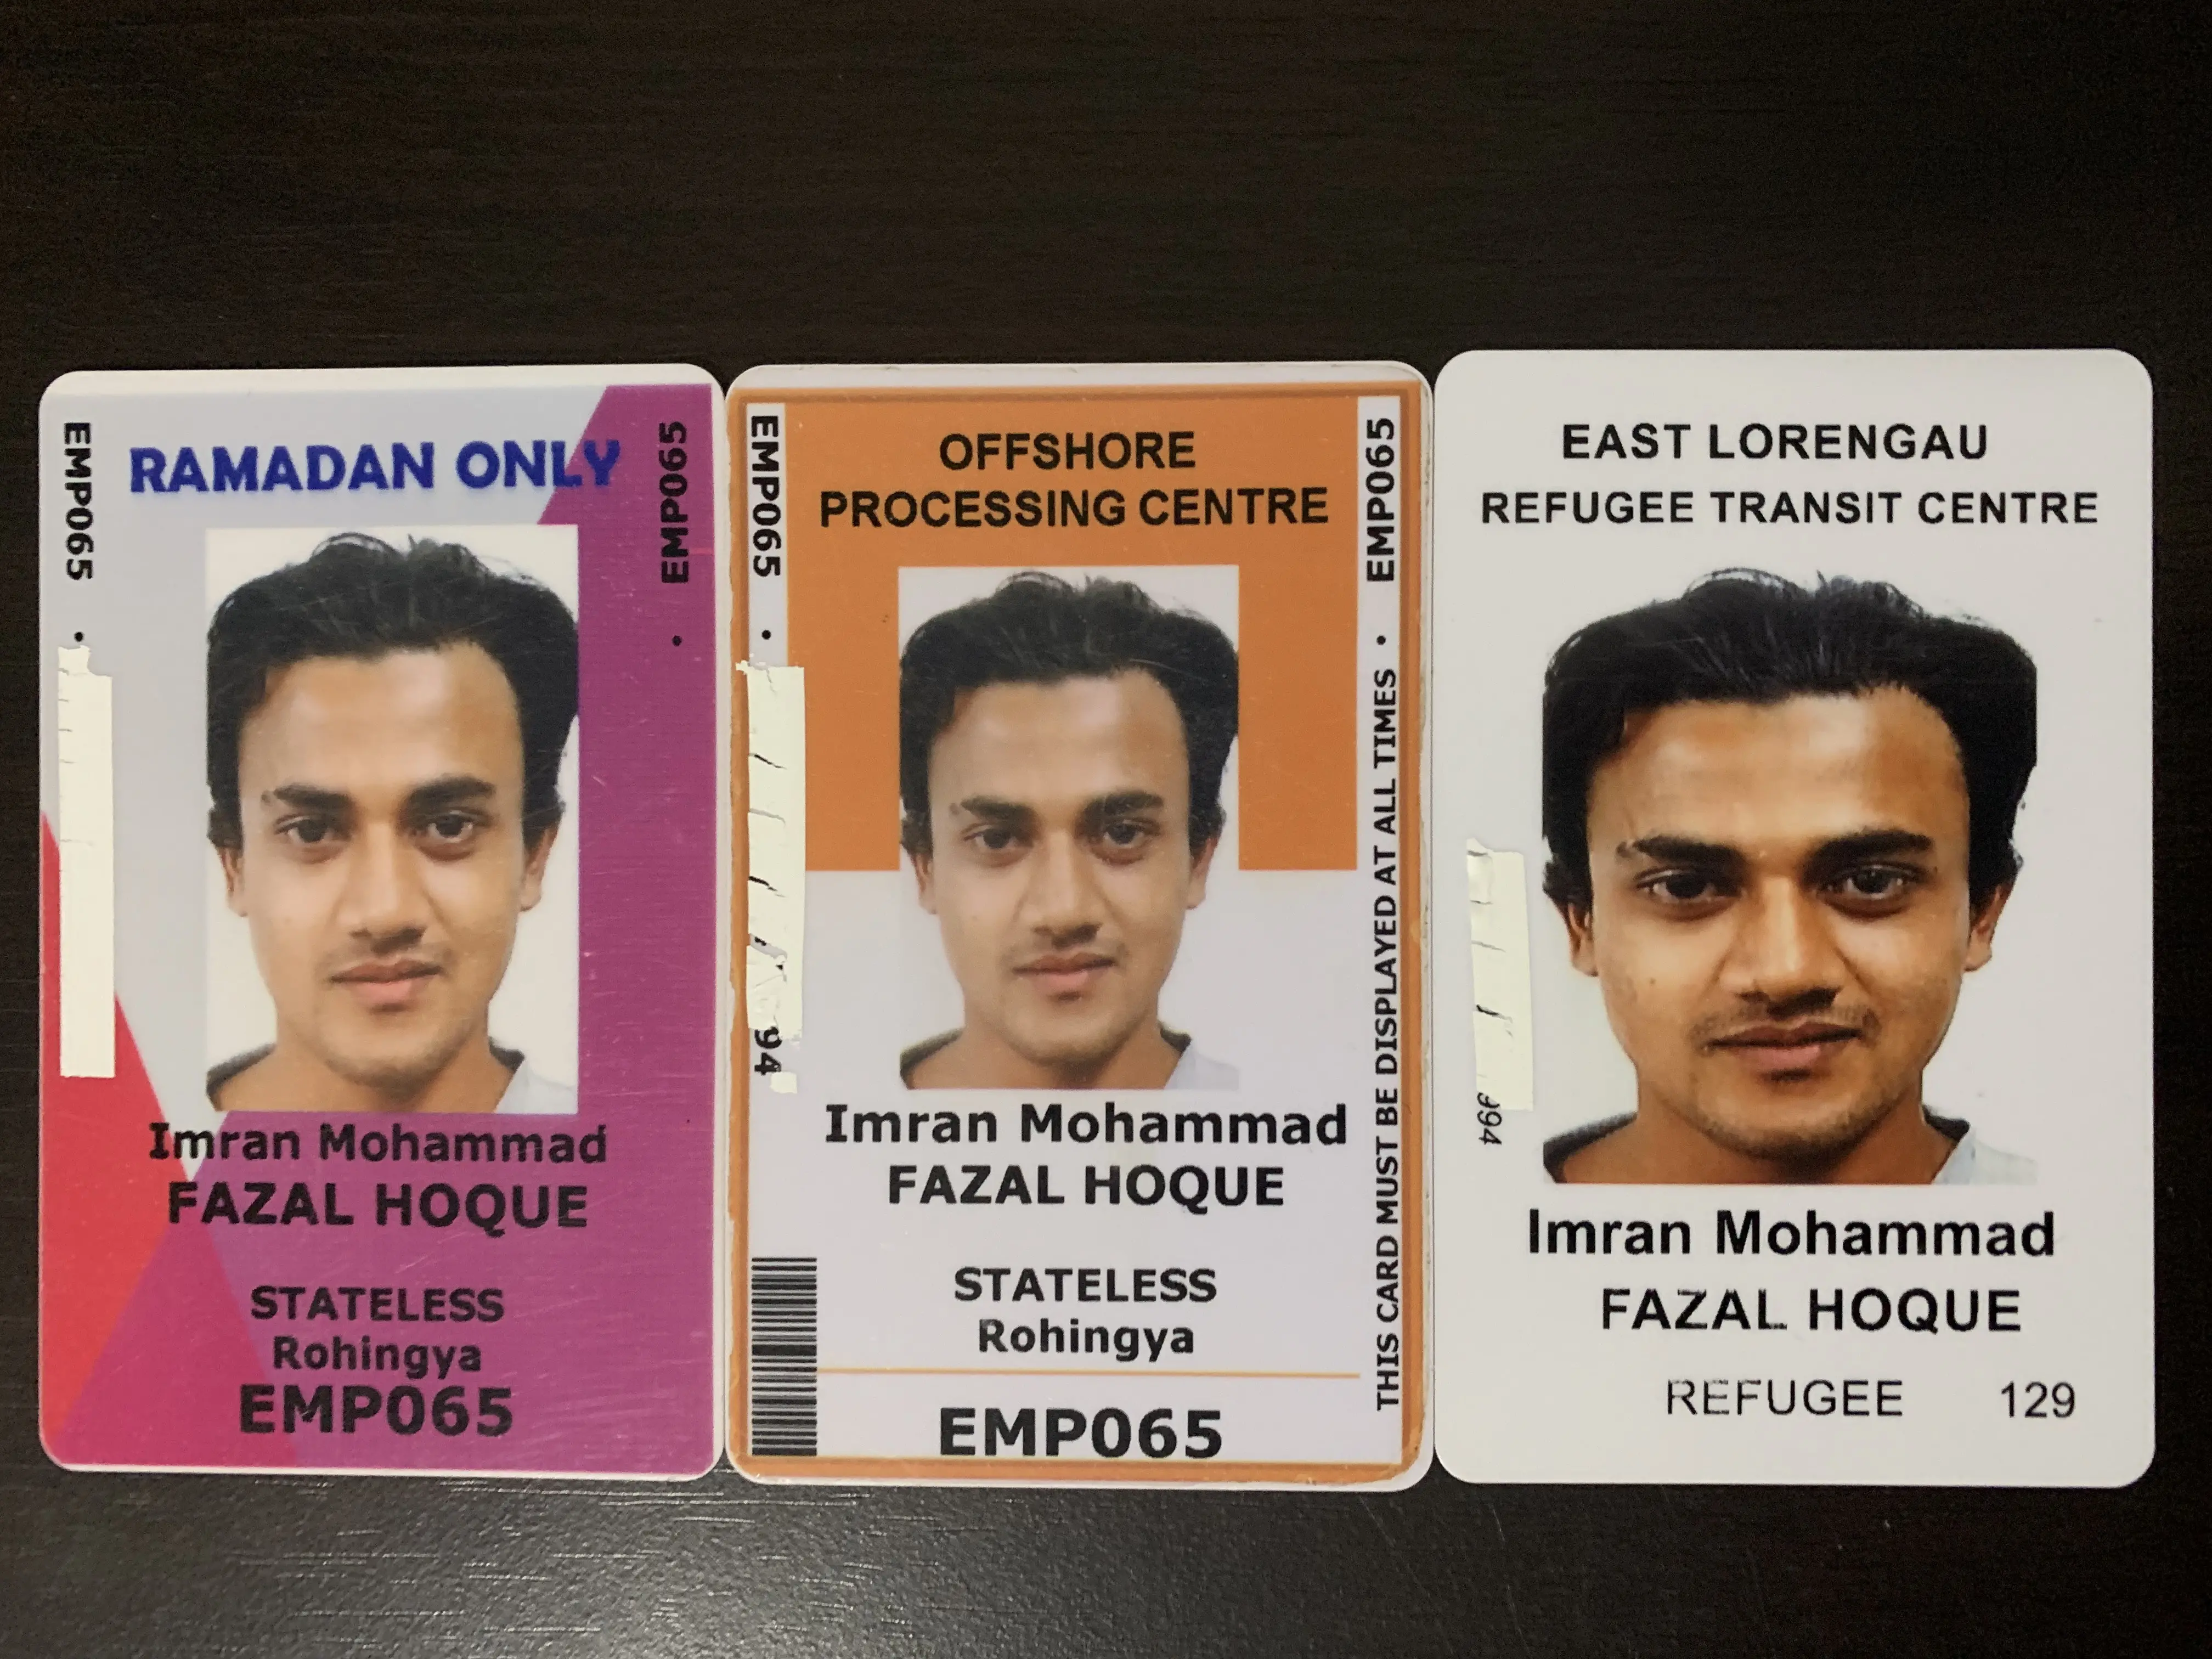 Imran's refugee identification cards